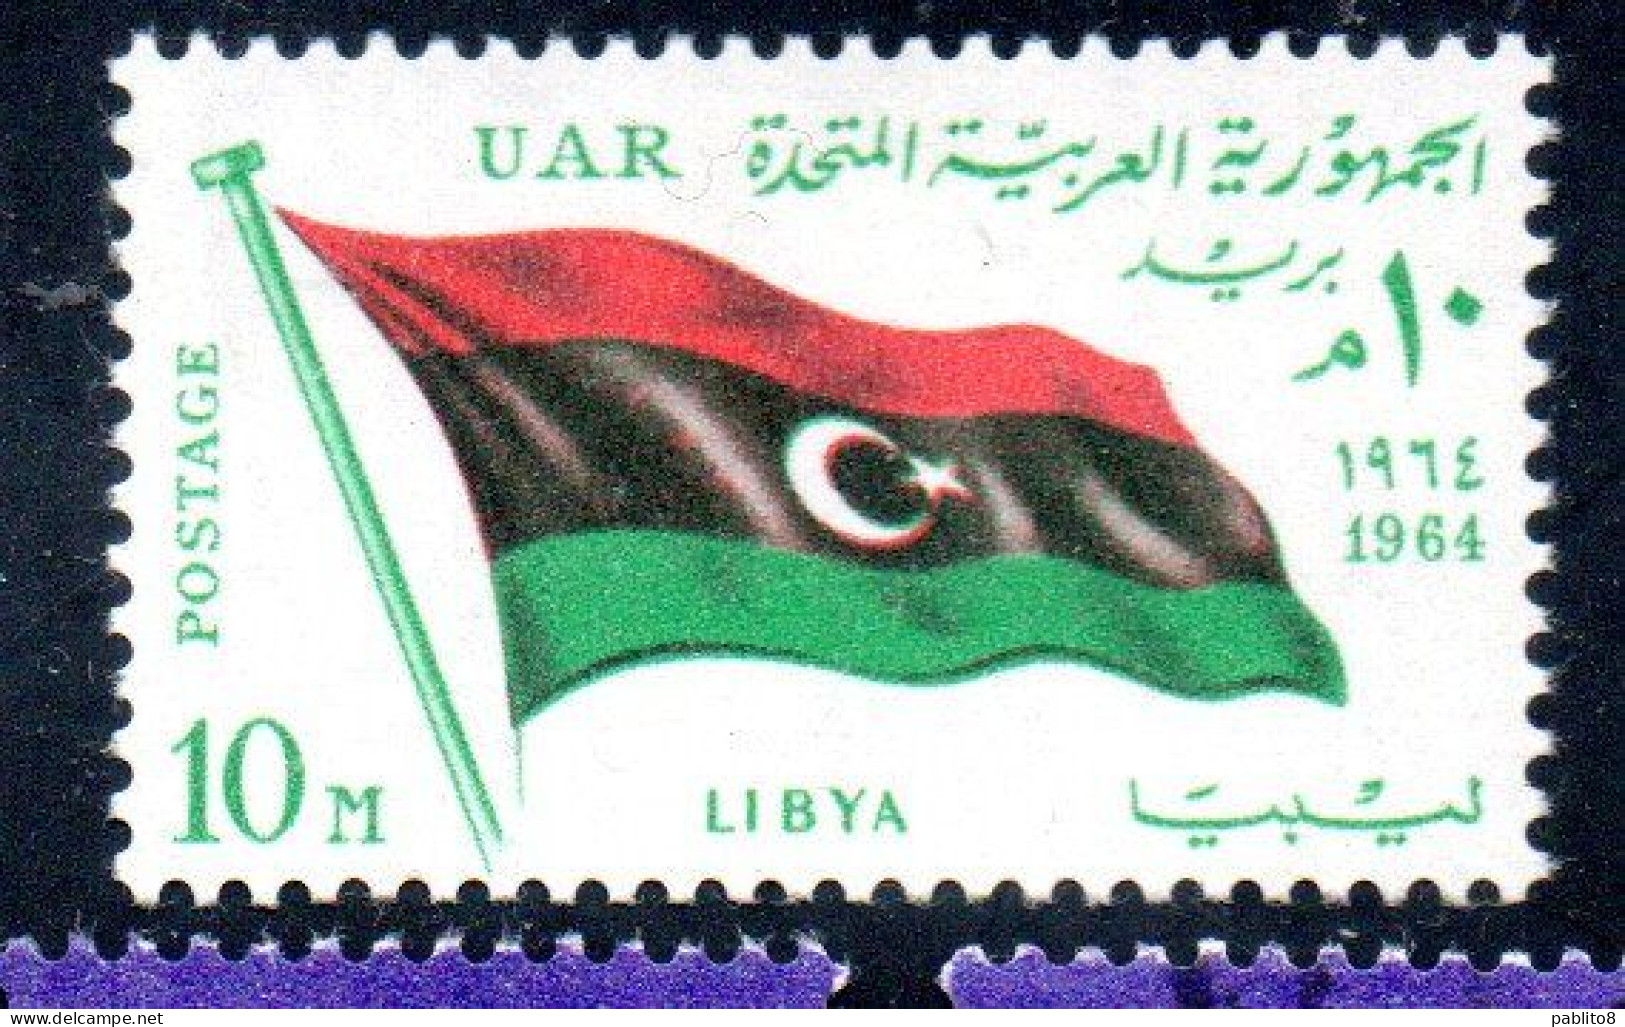 UAR EGYPT EGITTO 1964 SECOND MEETING OF HEADS STATE ARAB LEAGUE FLAG OF LIBYA 10m  MH - Nuovi